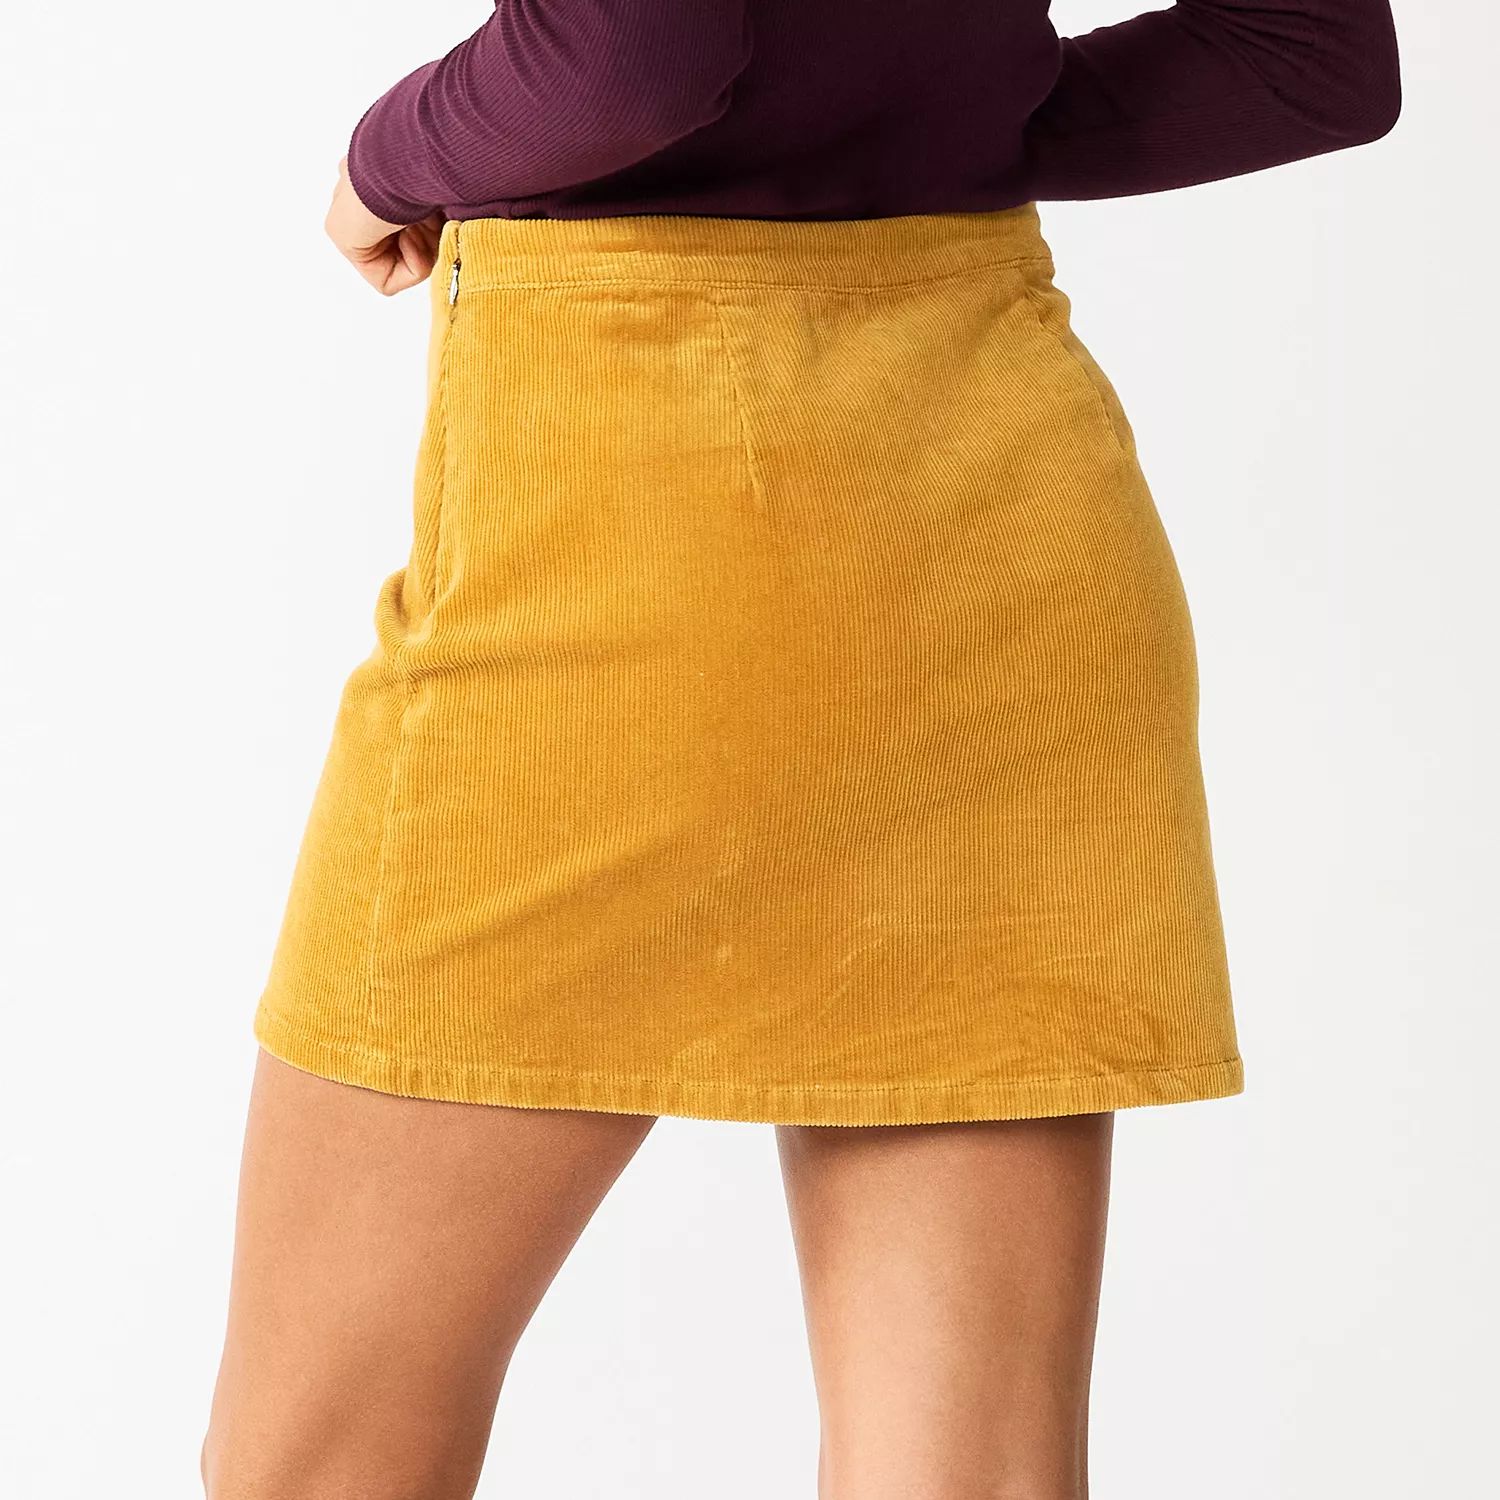 Мини-юбка SO для подростков со шнуровкой спереди SO толстовка honey eevi цвет mustard yellow